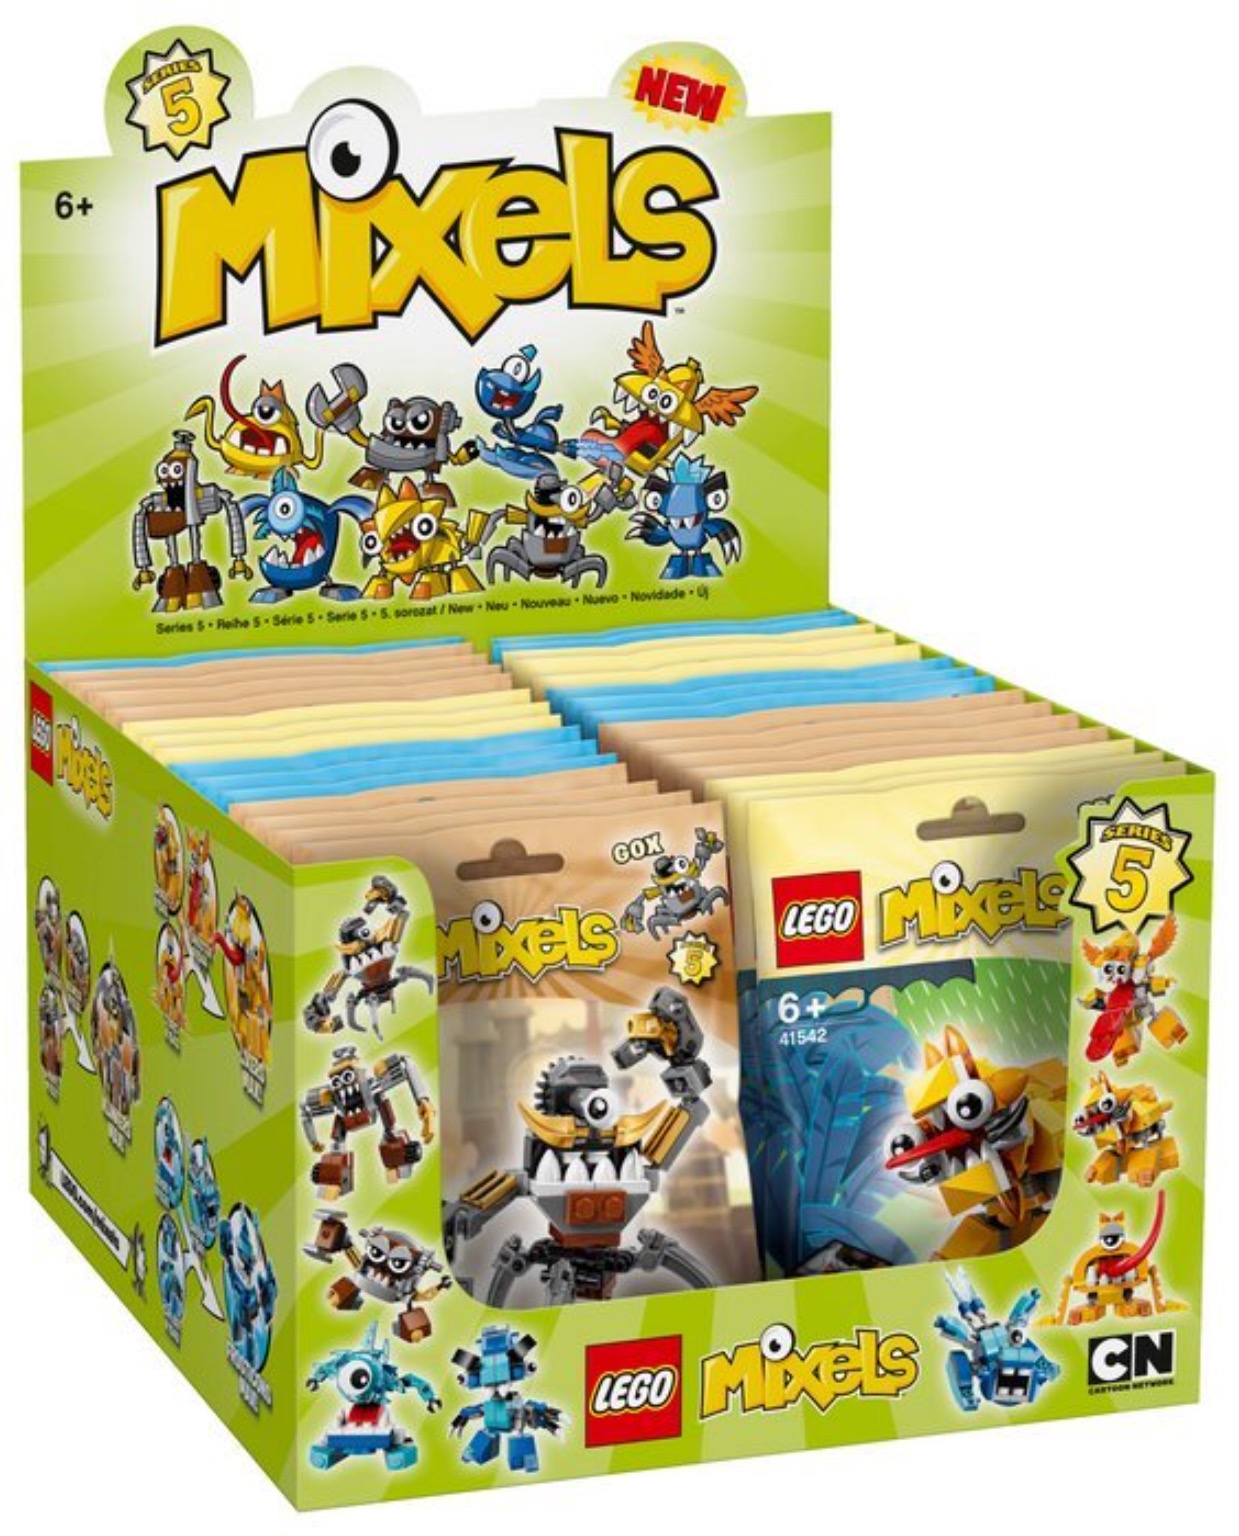 LEGO Mixels 5 | Brickset